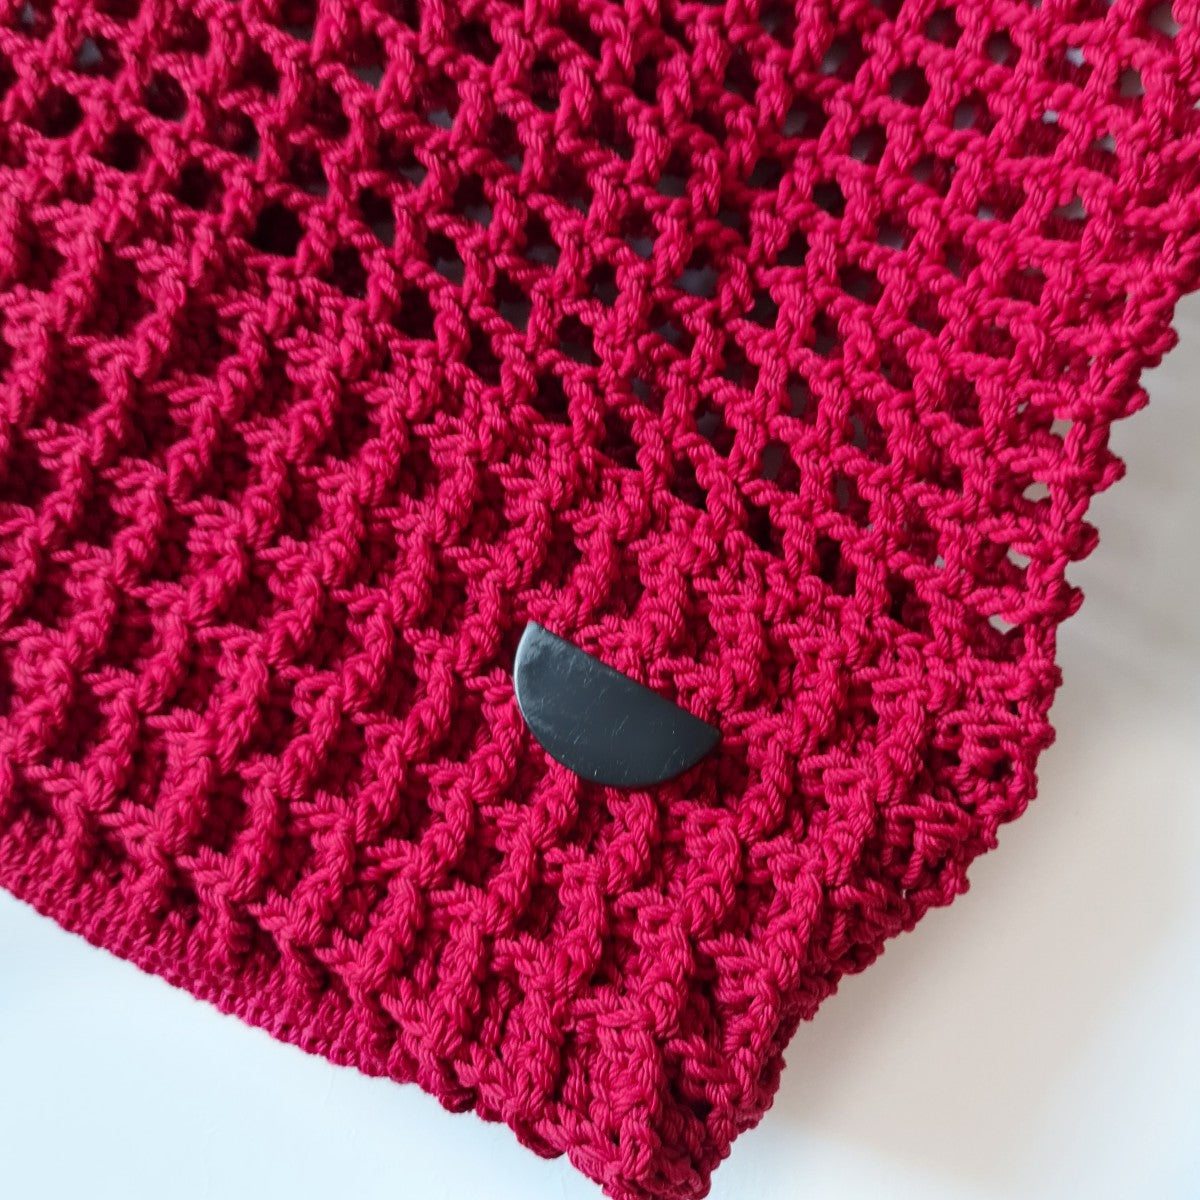 Halv Crochet Wine Red Bag